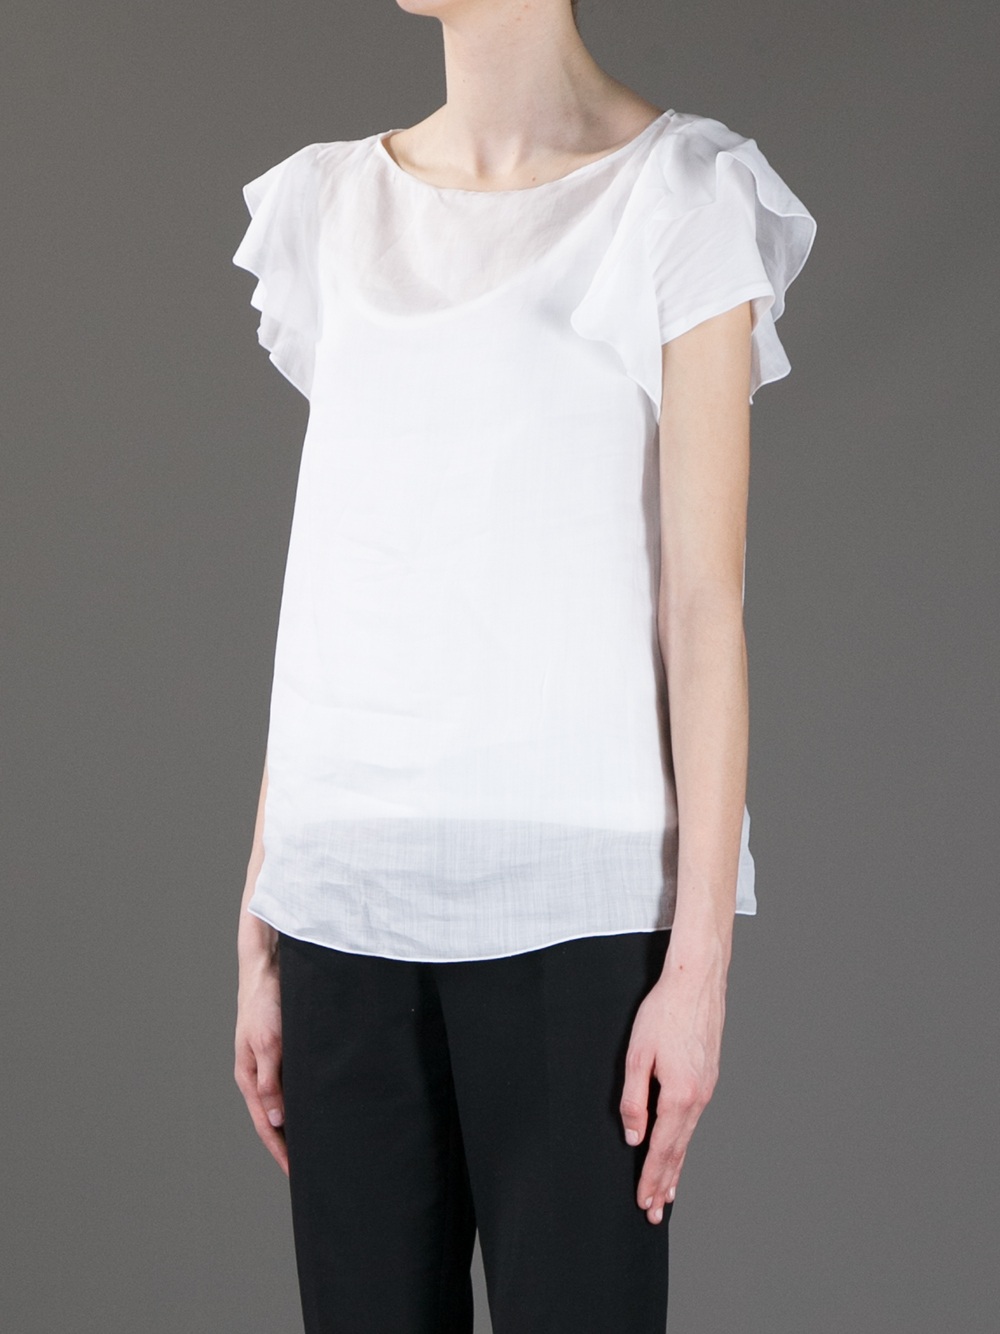 Max Mara Studio Ruffle Sleeve Blouse in White - Lyst